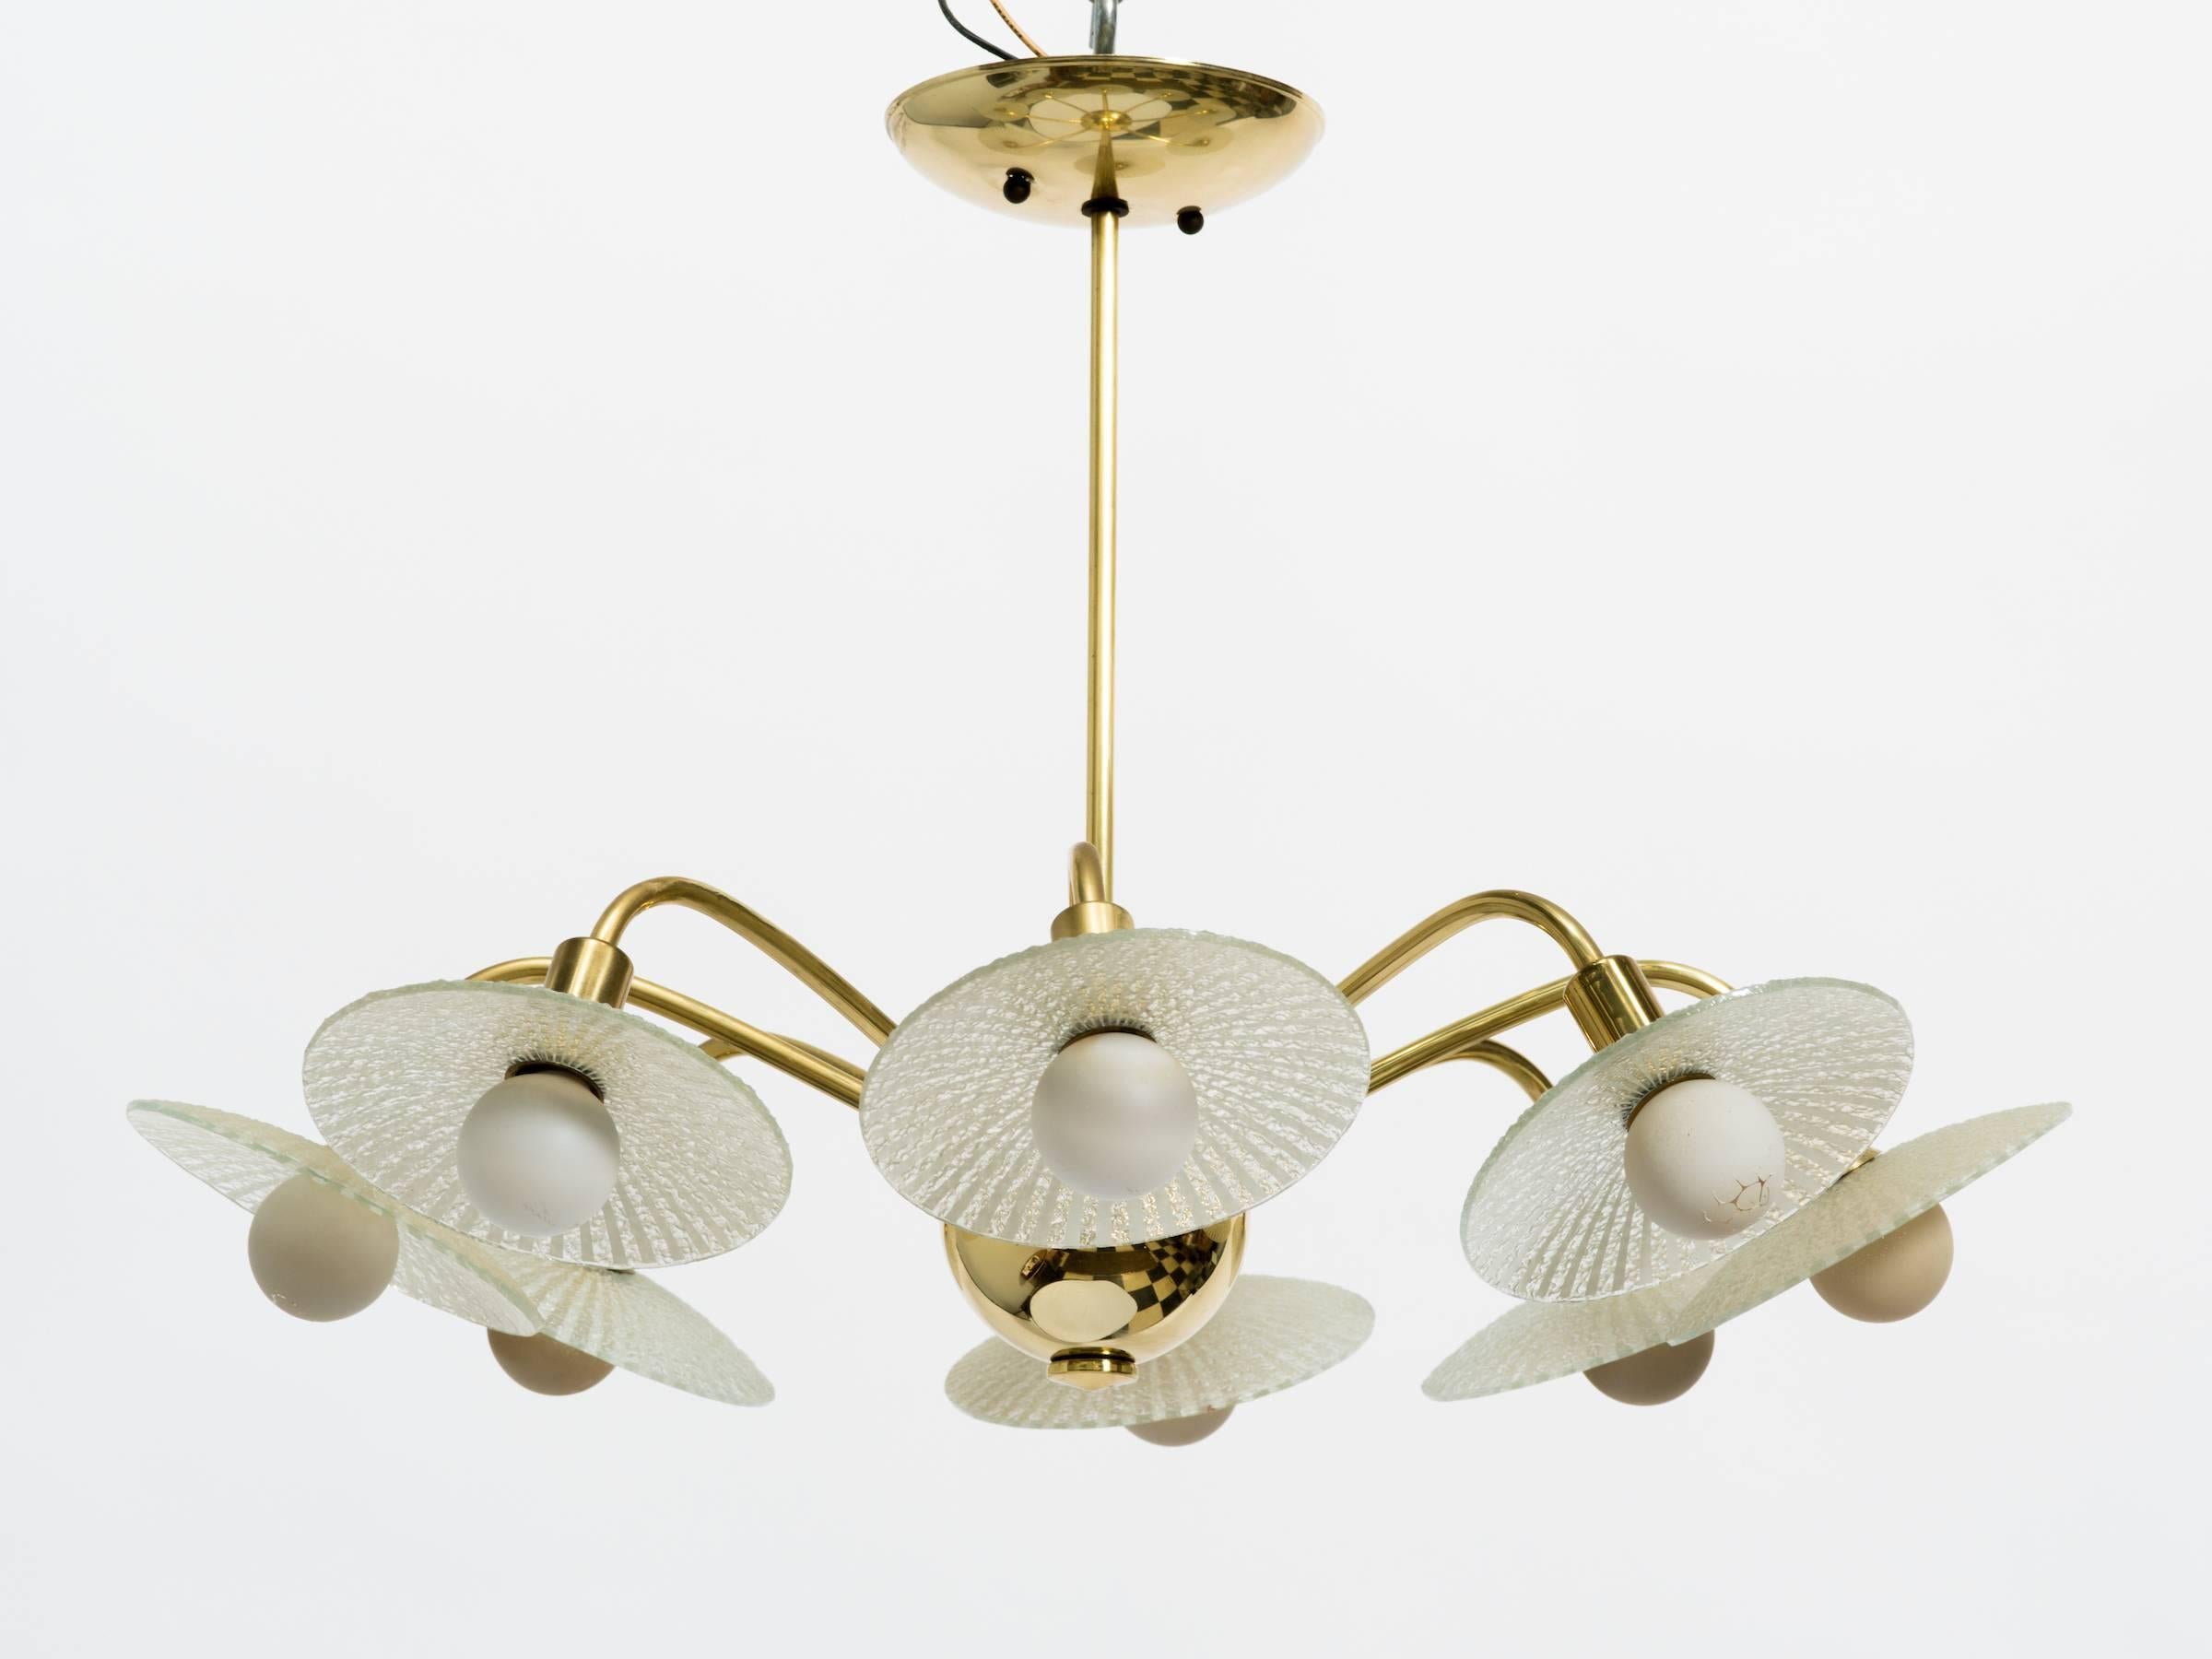 Stilnovo brass chandelier with glass bobeches.